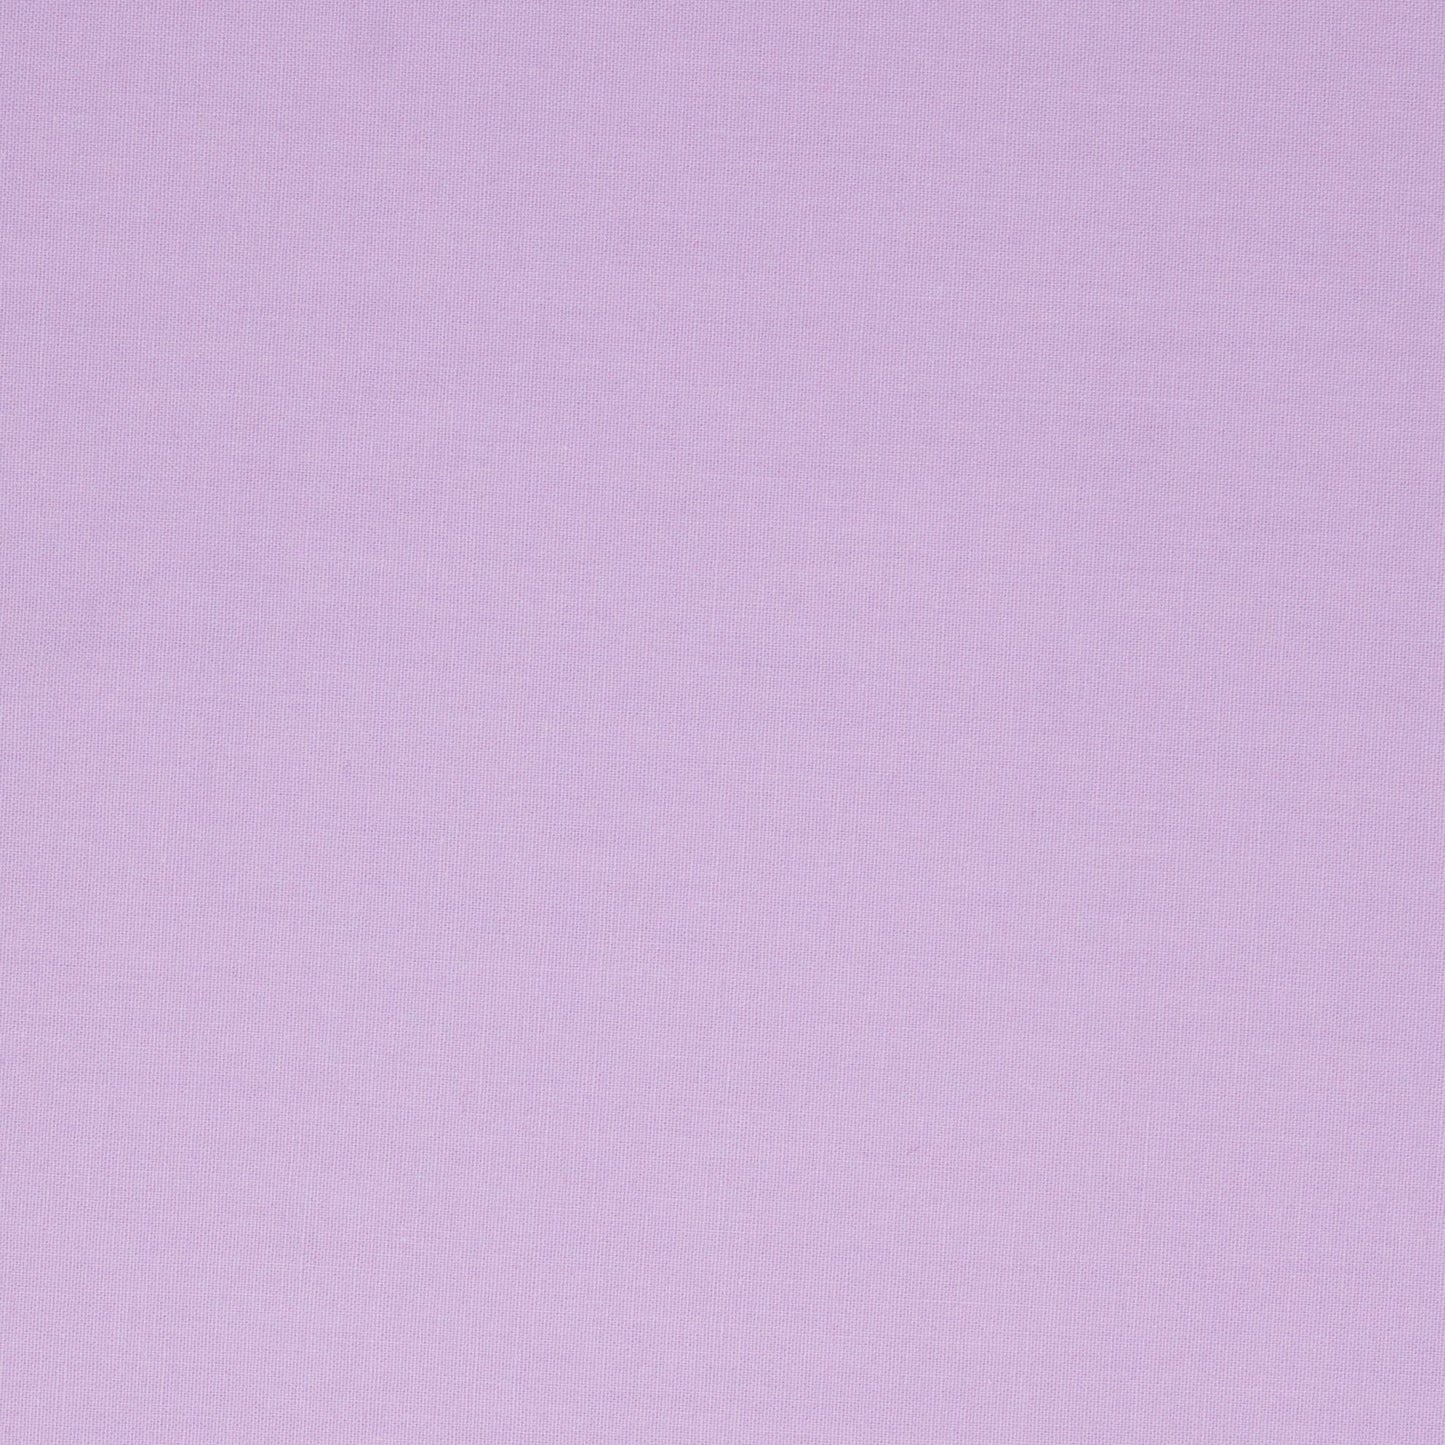 Colorworks Premium Solid Lavender ½ yd